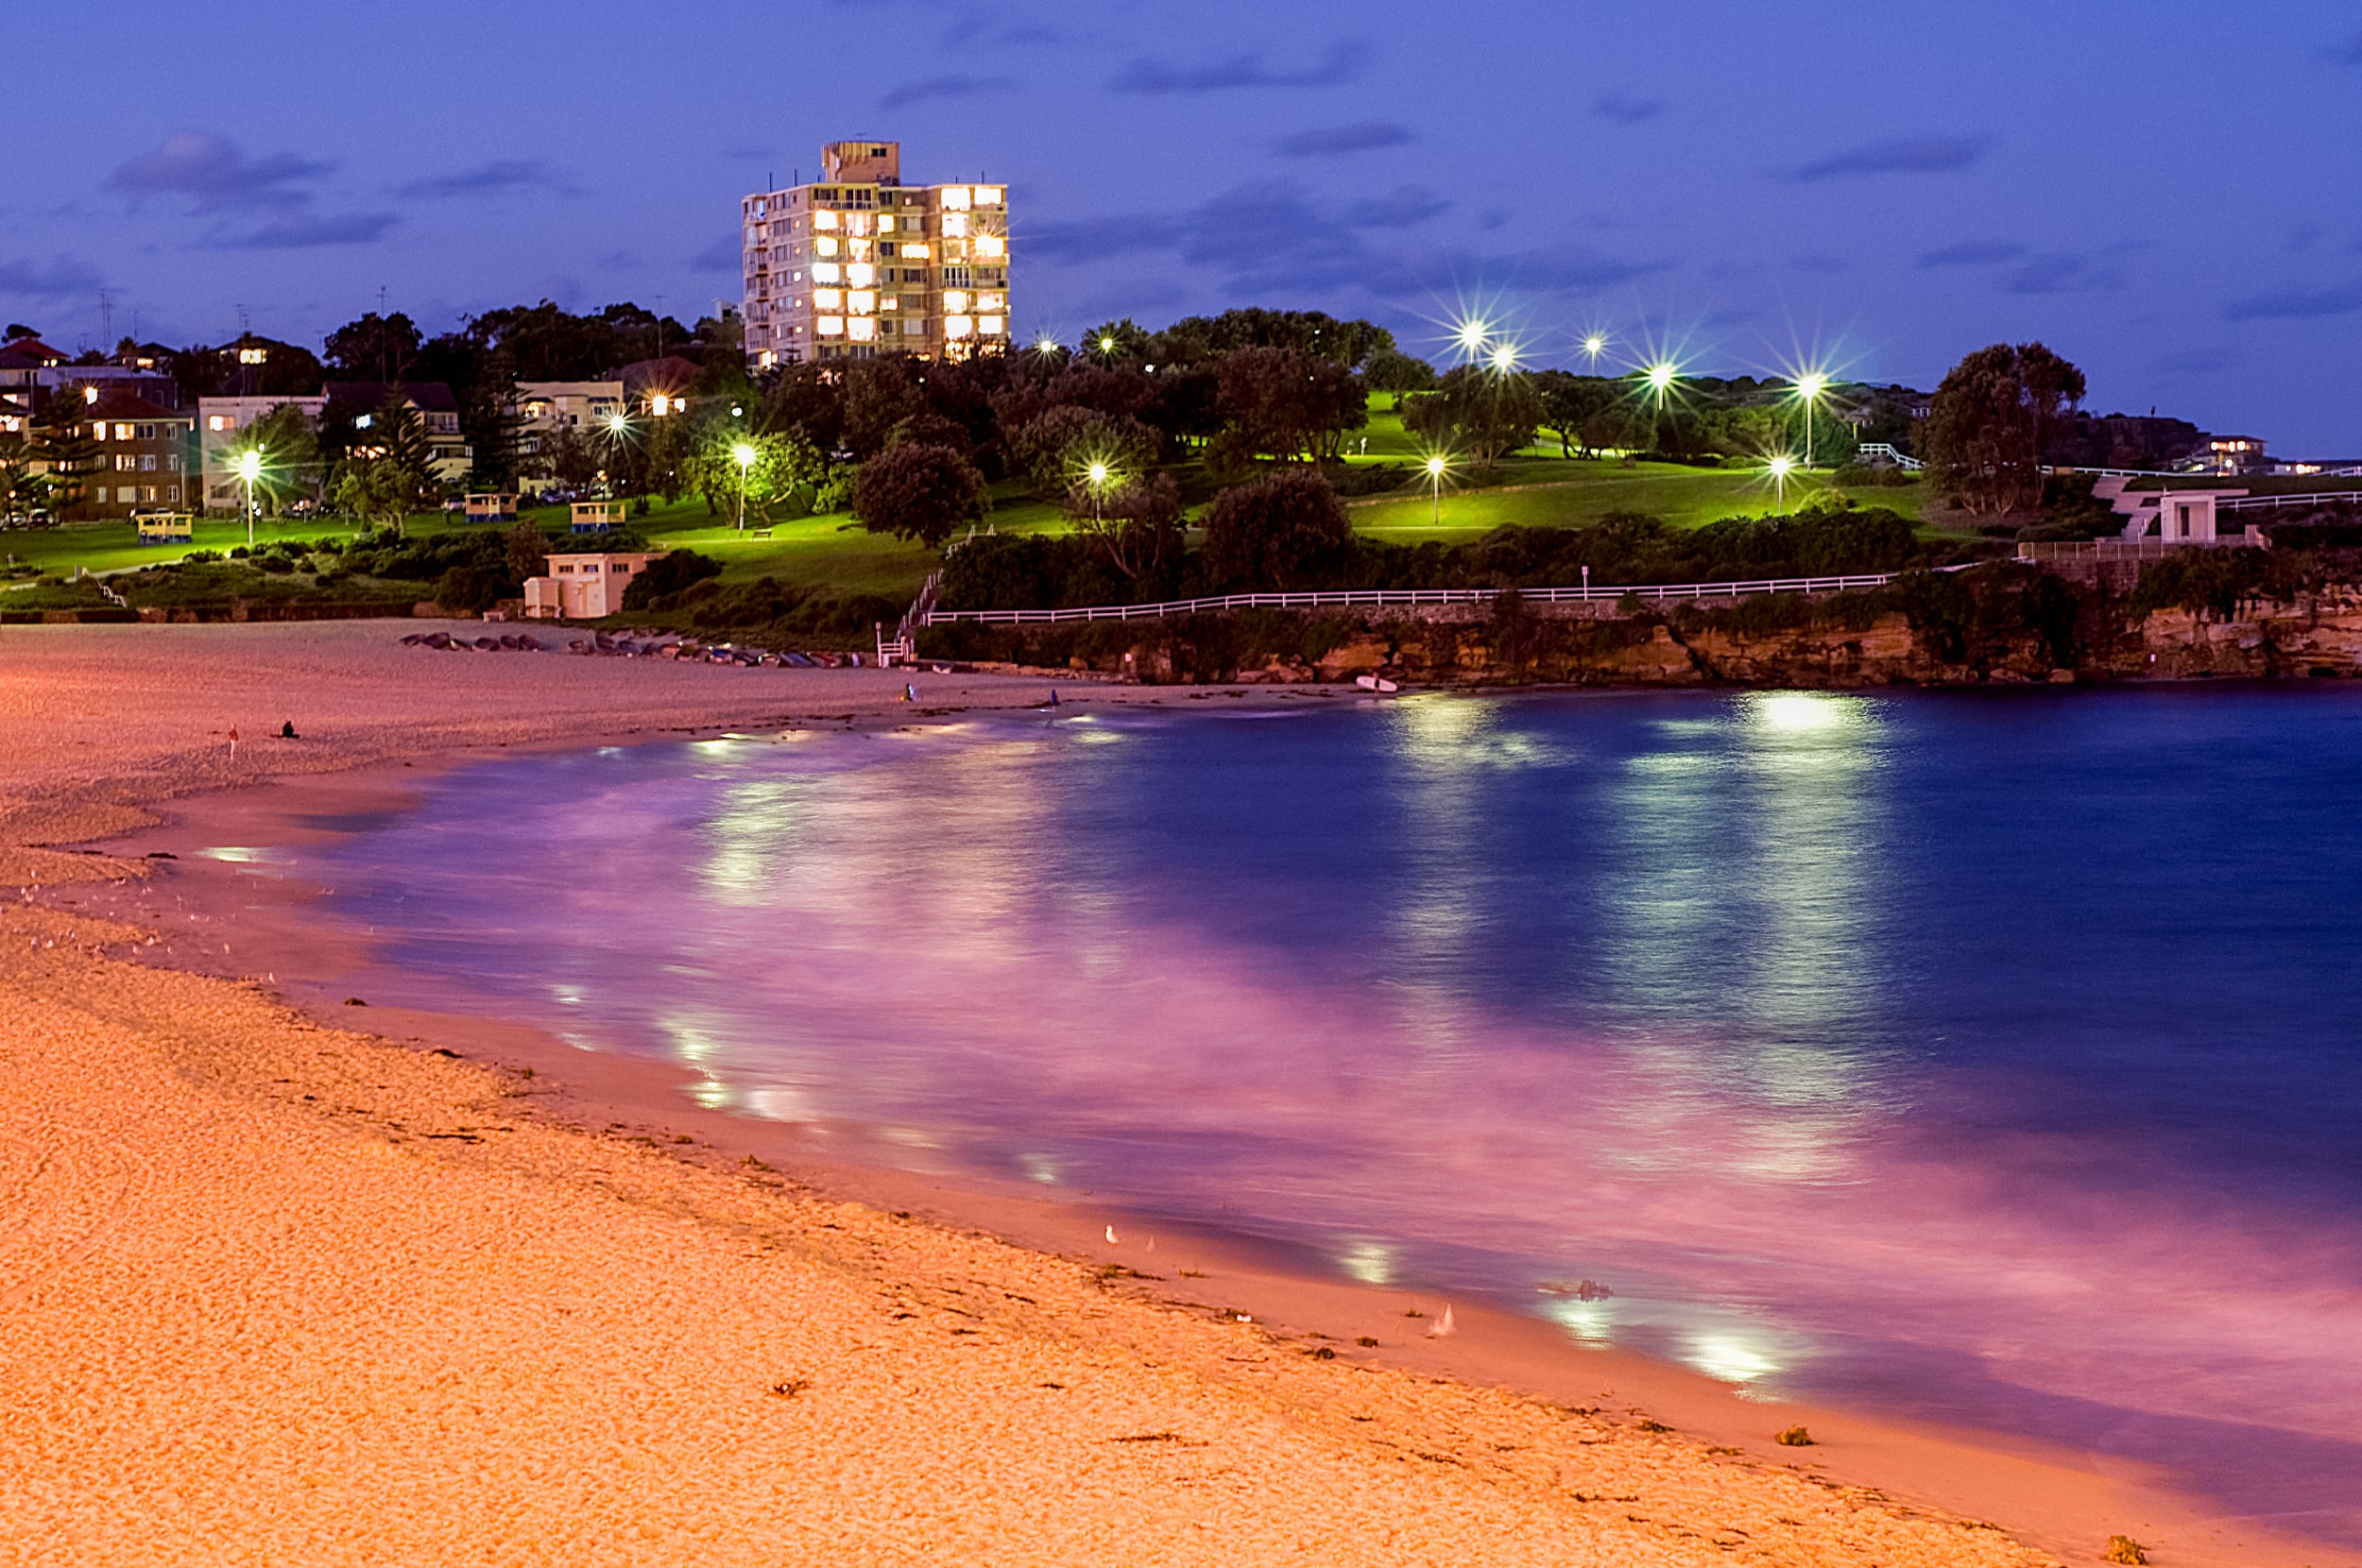 Coogee Beach, Sydney, Australia at night